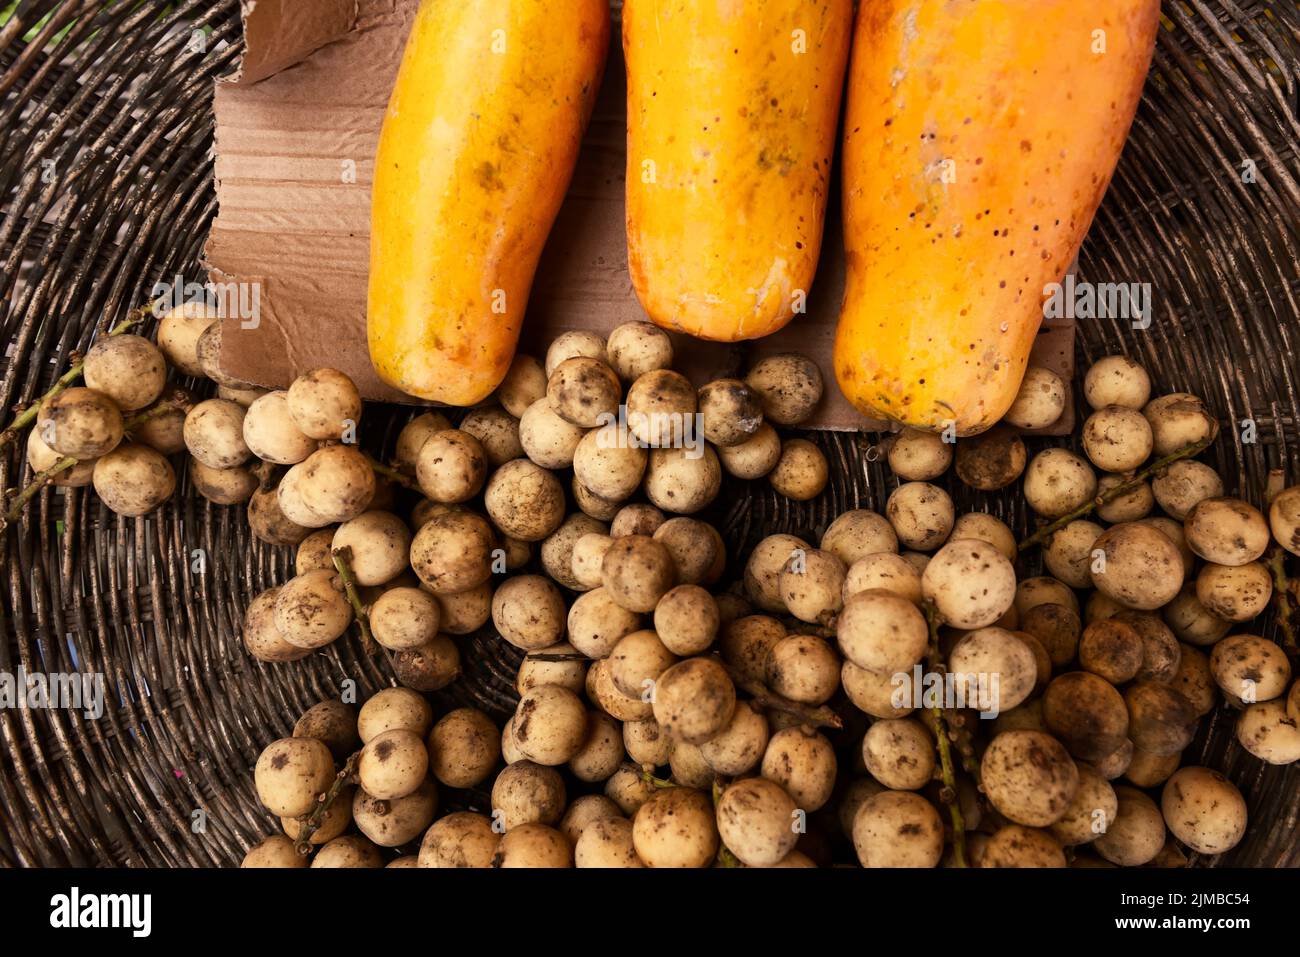 Basket of longans and papayas Stock Photo